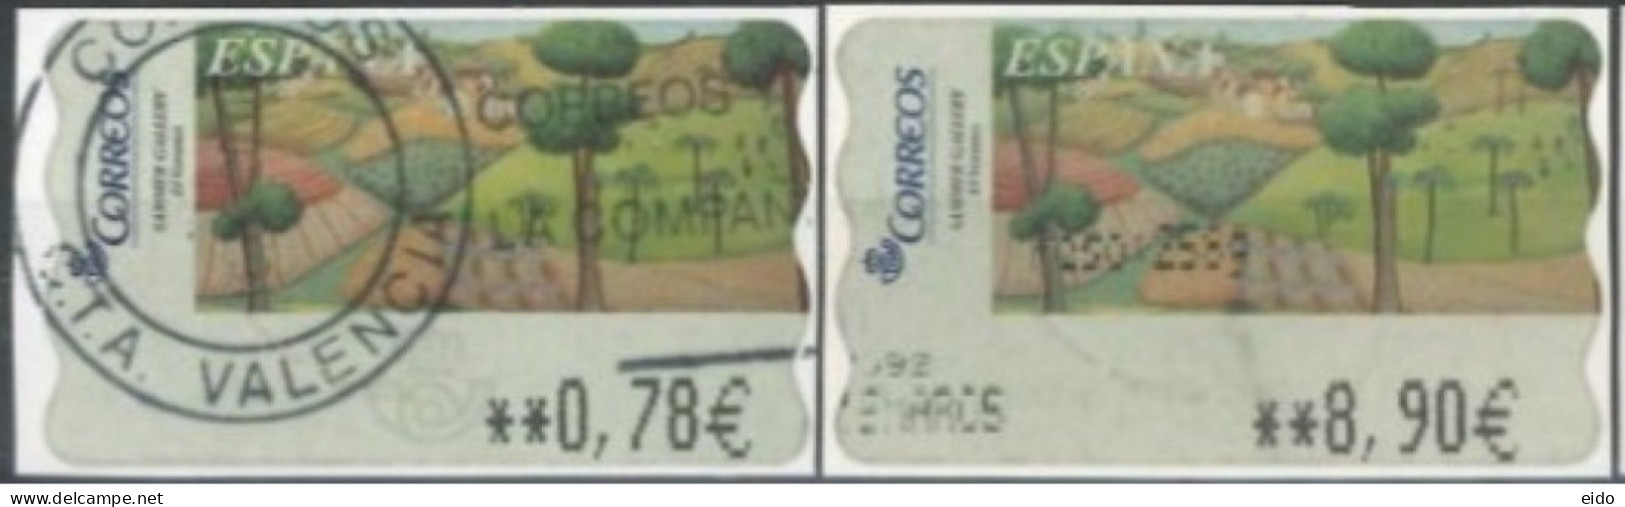 SPAIN - 2005 -  SAMER GALLERY, VERANO STAMPS LABELS SET OF 2 OF DIFFERENT VALUES, USED . - Gebruikt